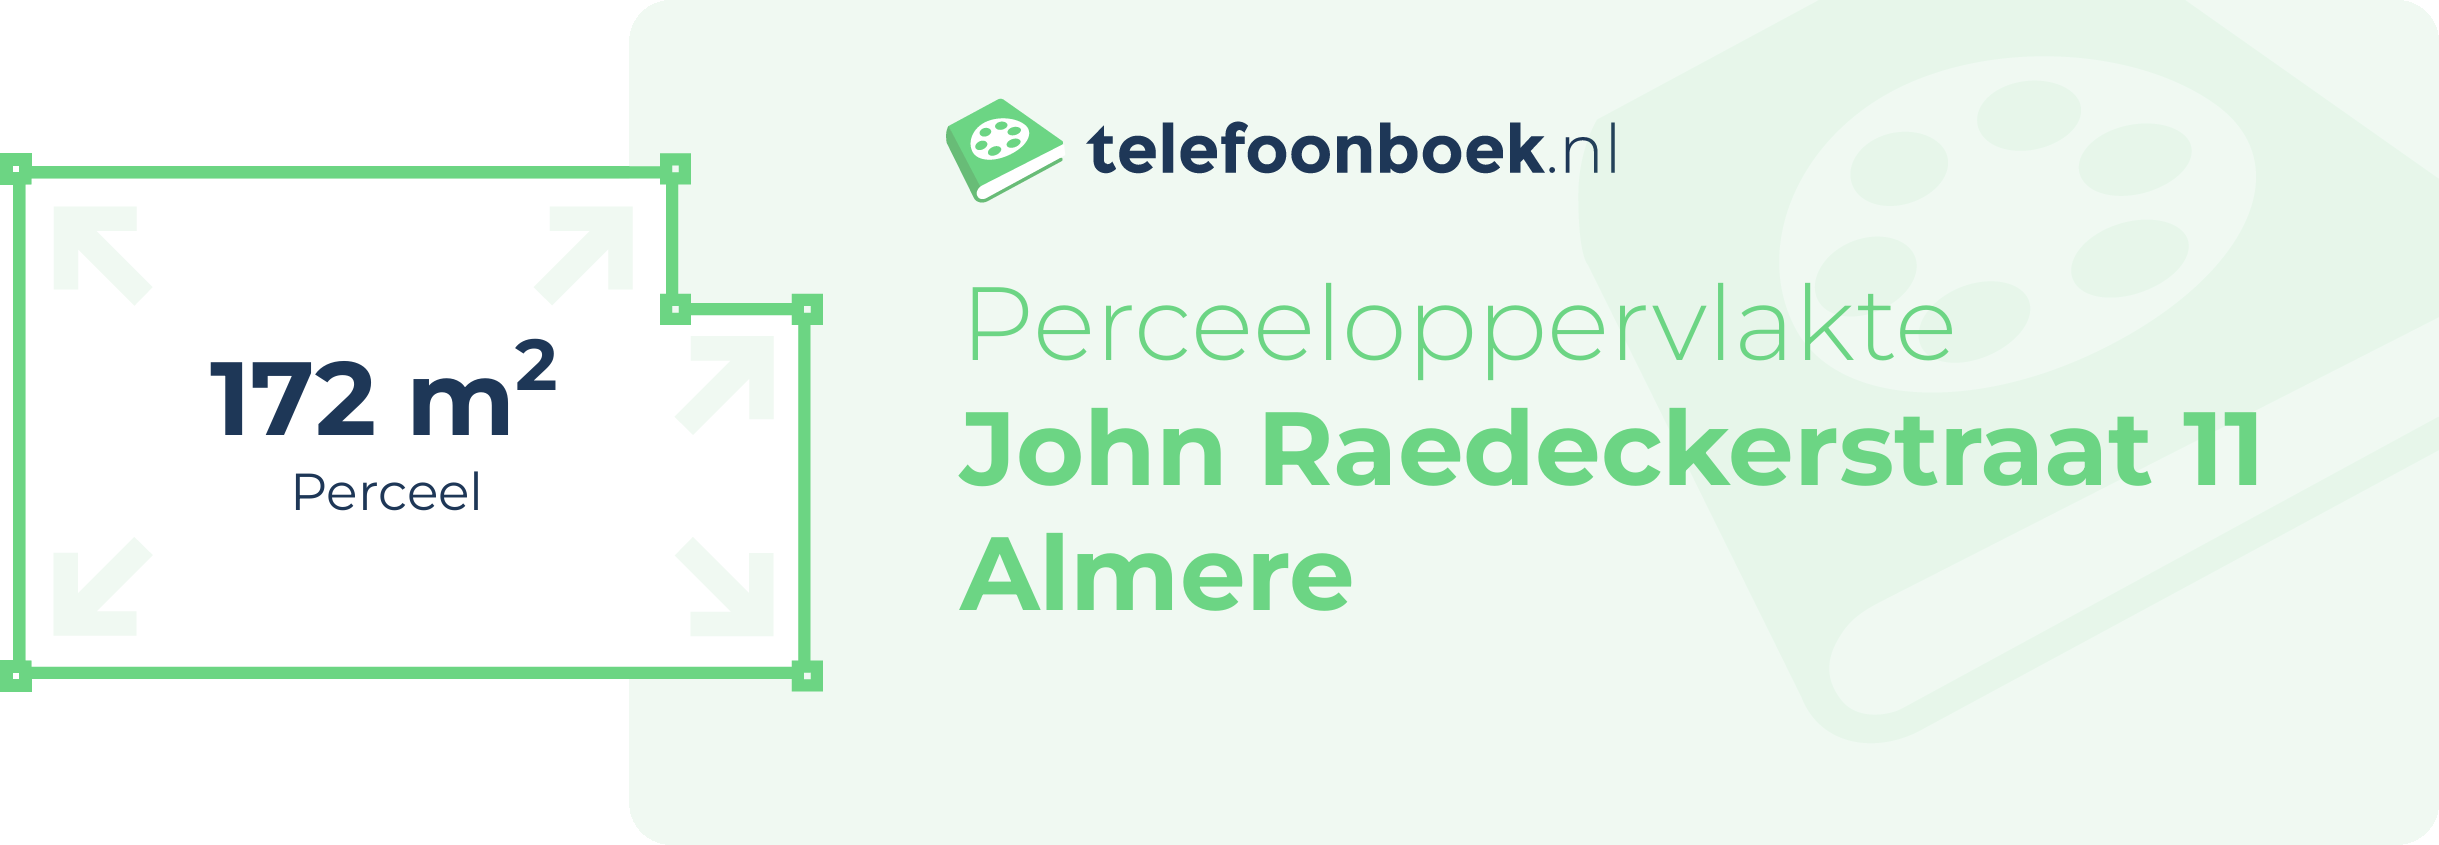 Perceeloppervlakte John Raedeckerstraat 11 Almere